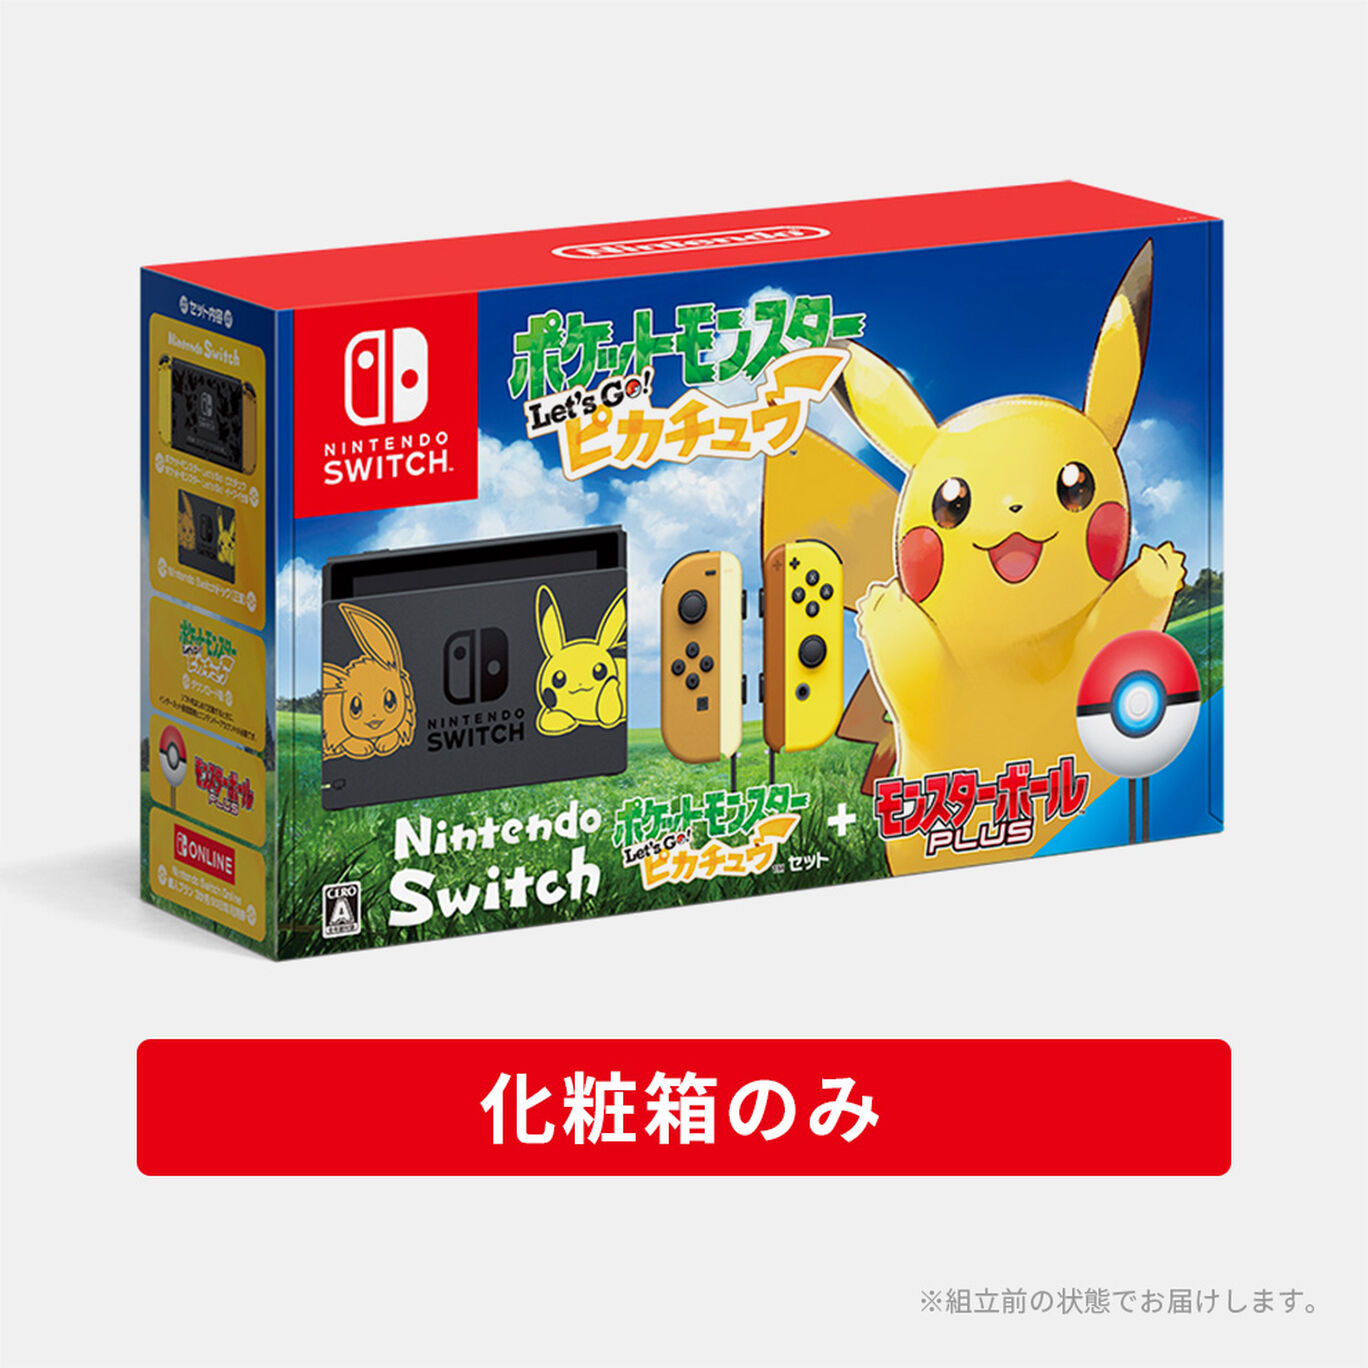 Nintendo Switch ポケットモンスター Let's Go! ピカチュウセット 化粧箱